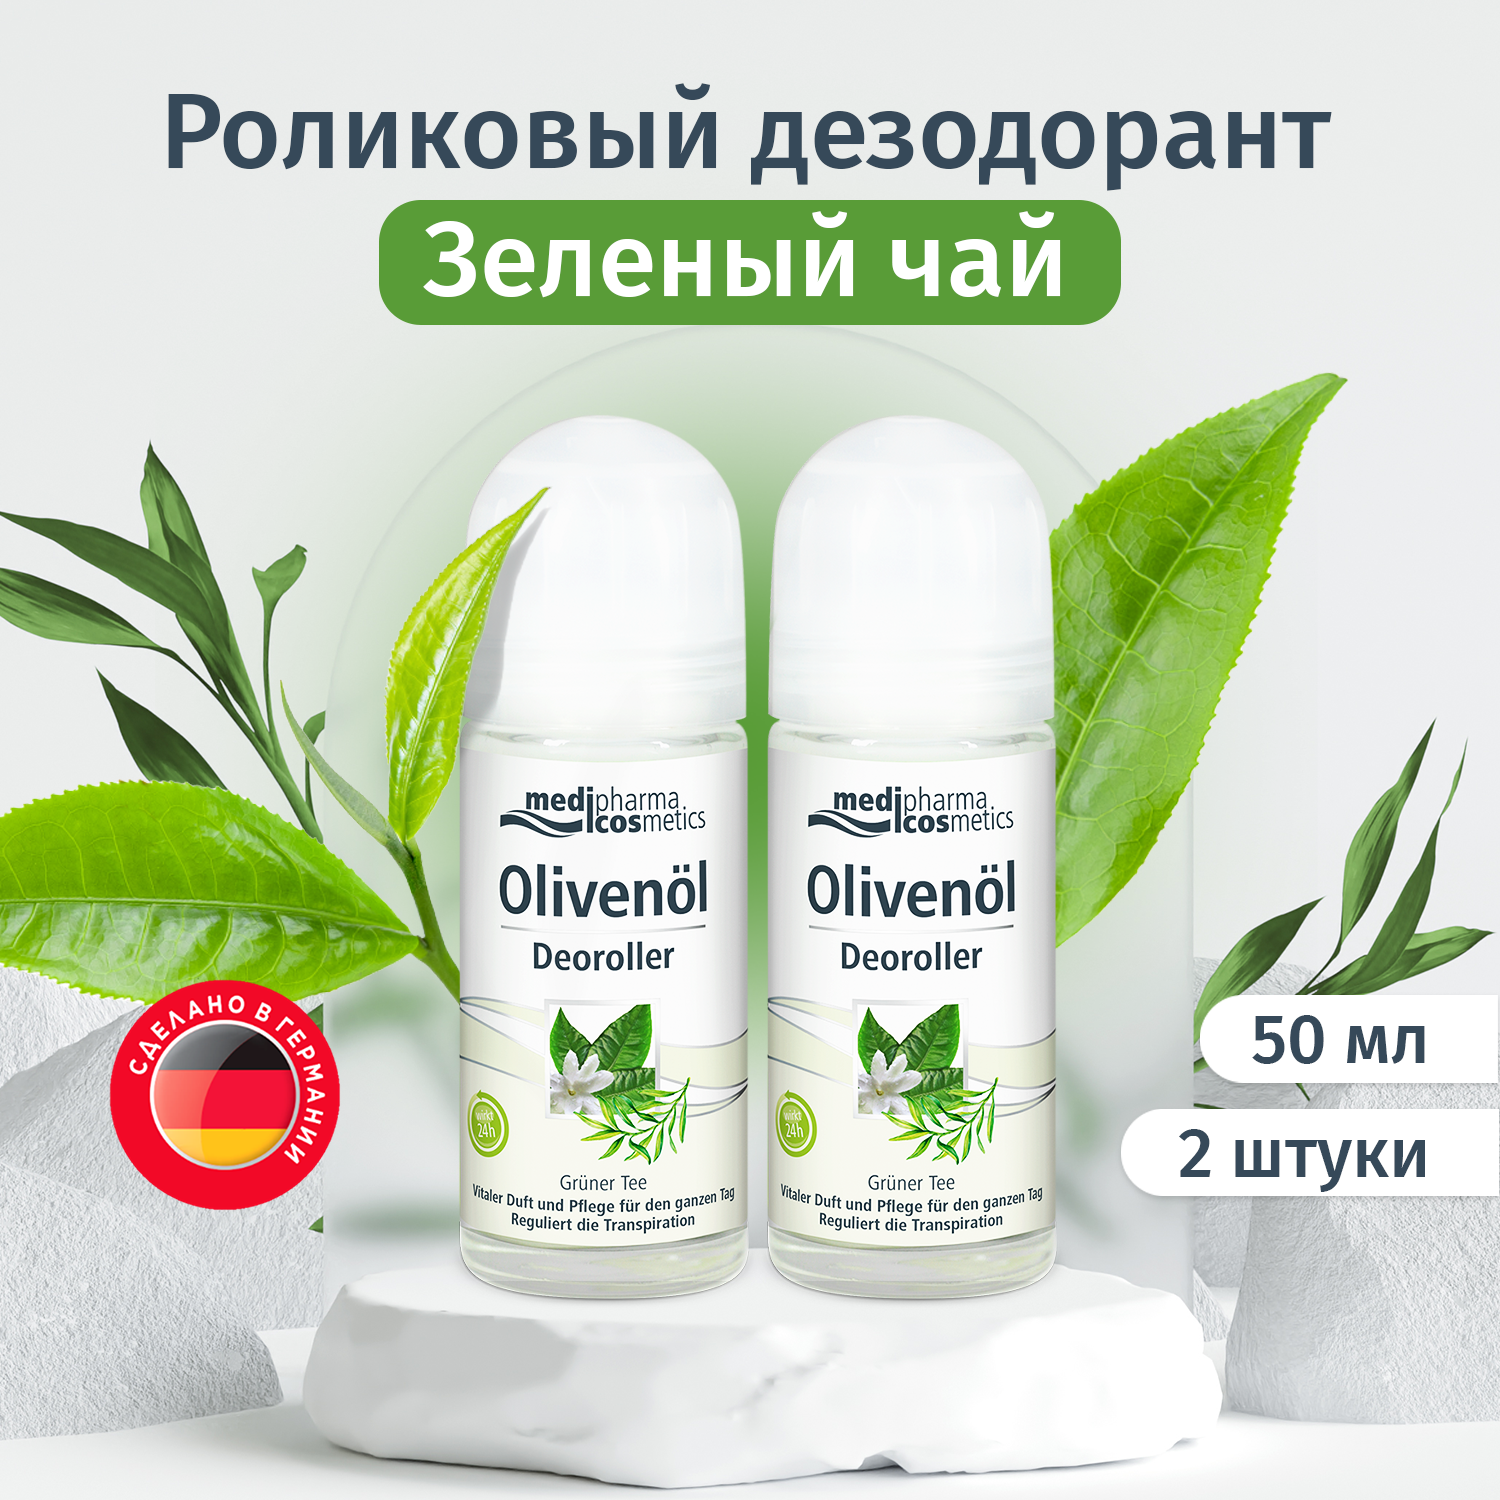 Medipharma cosmetics Olivenol дезодорант роликовый "Зеленый чай", набор 50мл х 2шт